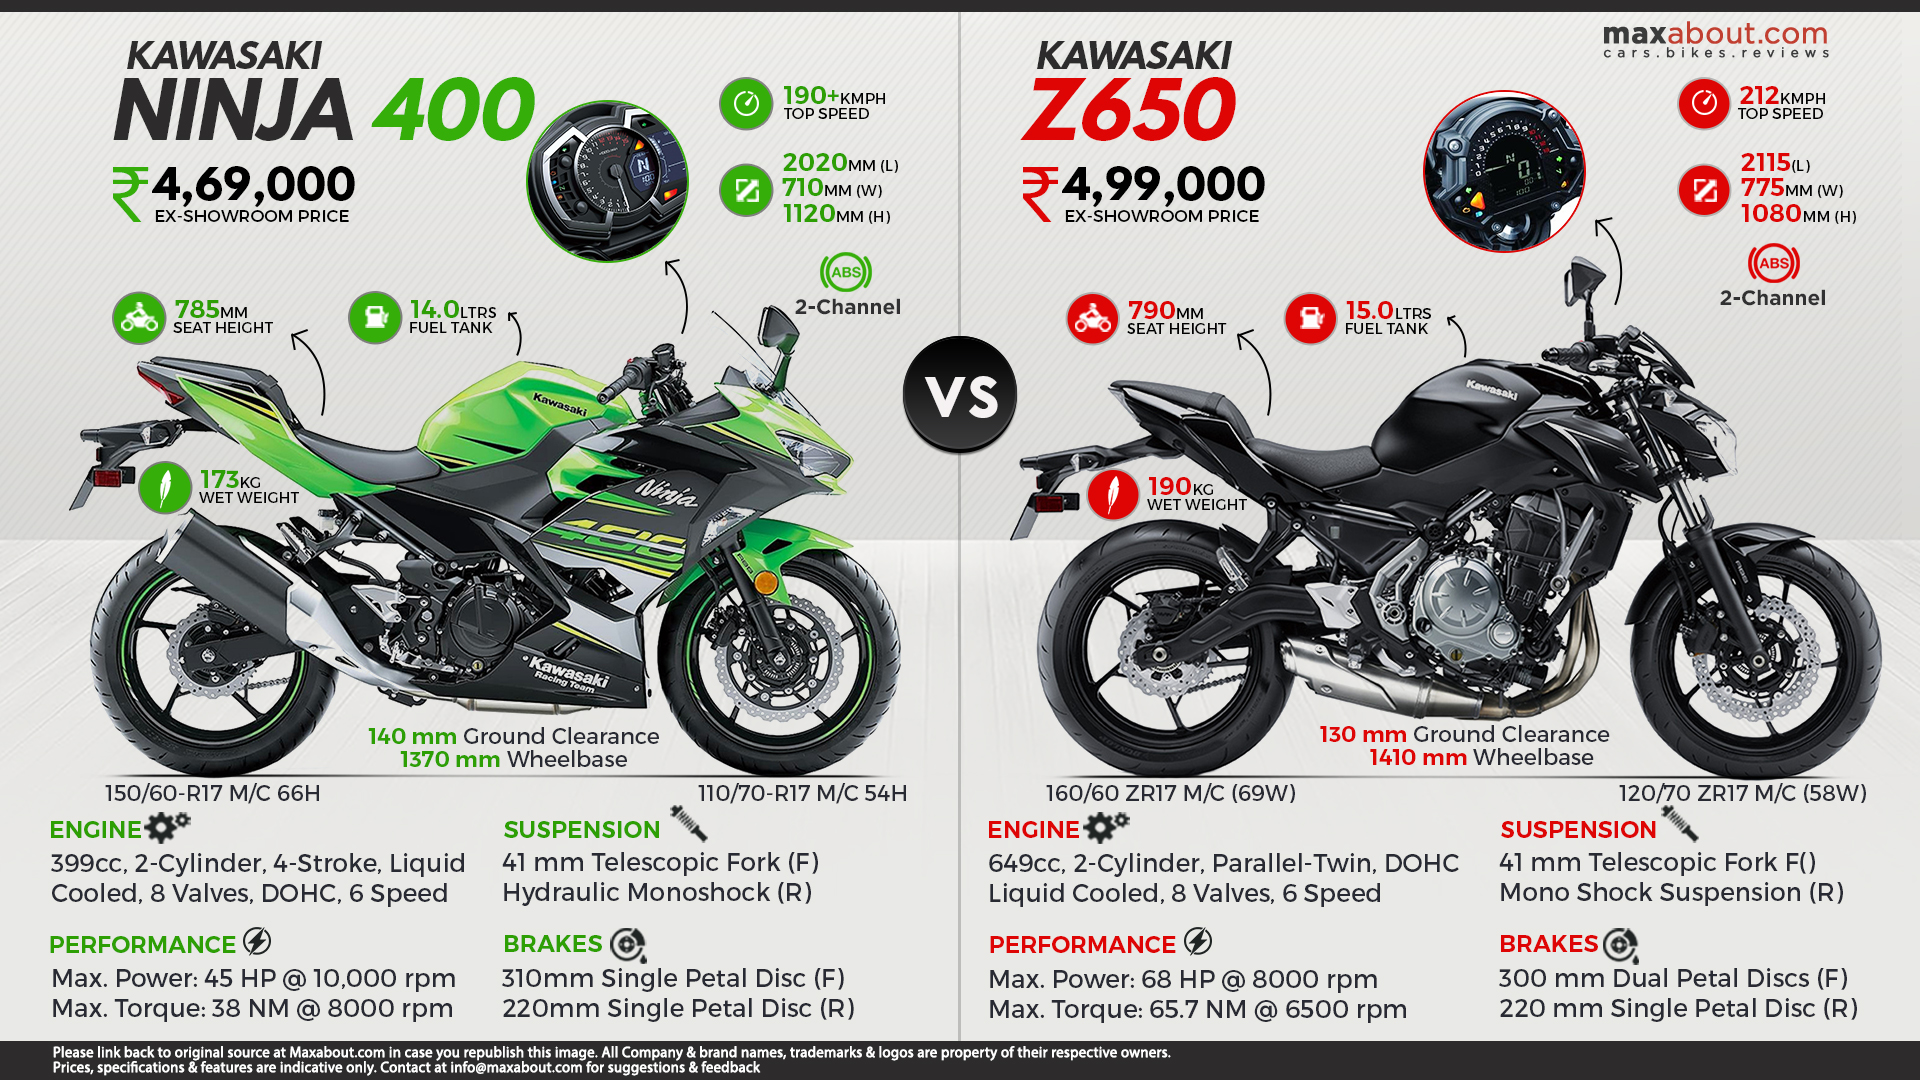 Kawasaki ninja h2r — самый мощный серийный мотоцикл в мире!